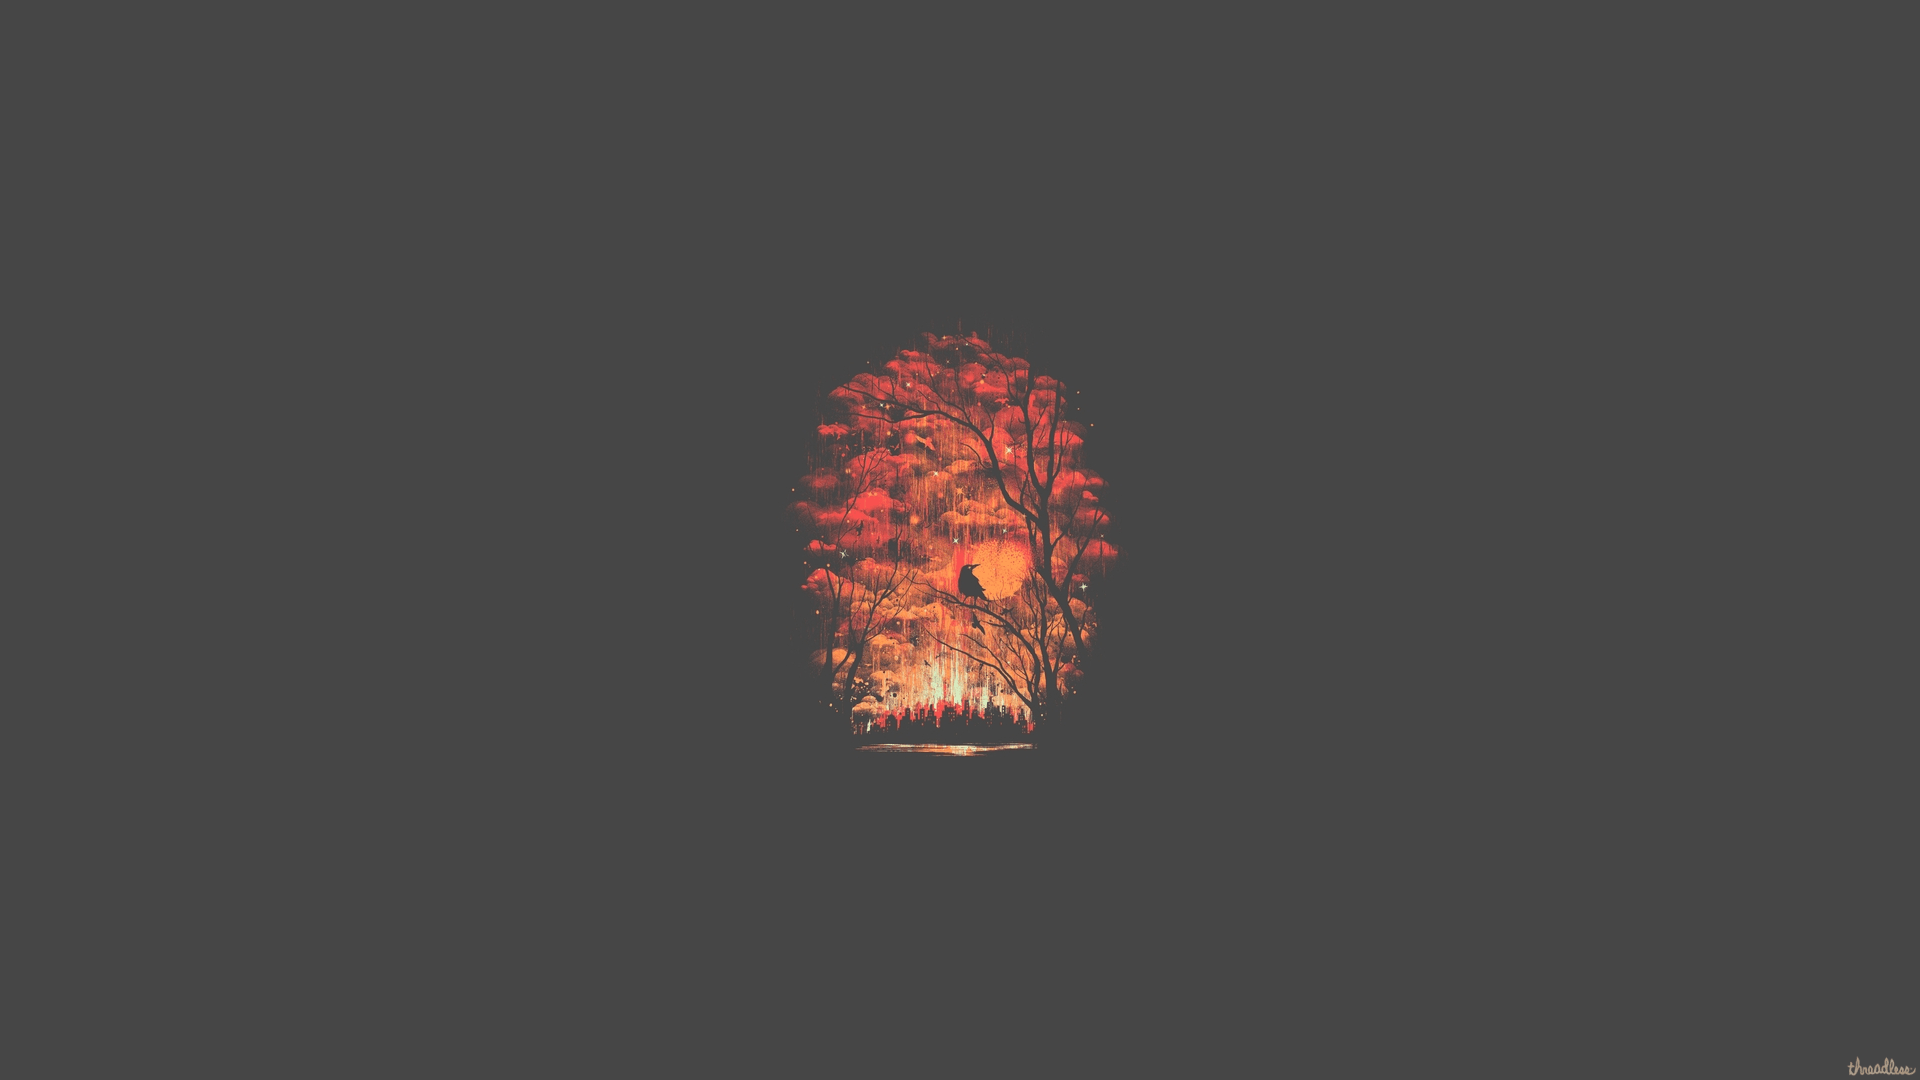 Forest Minimalist Minimalist, HD Artist, 4k Wallpaper, Image, Background